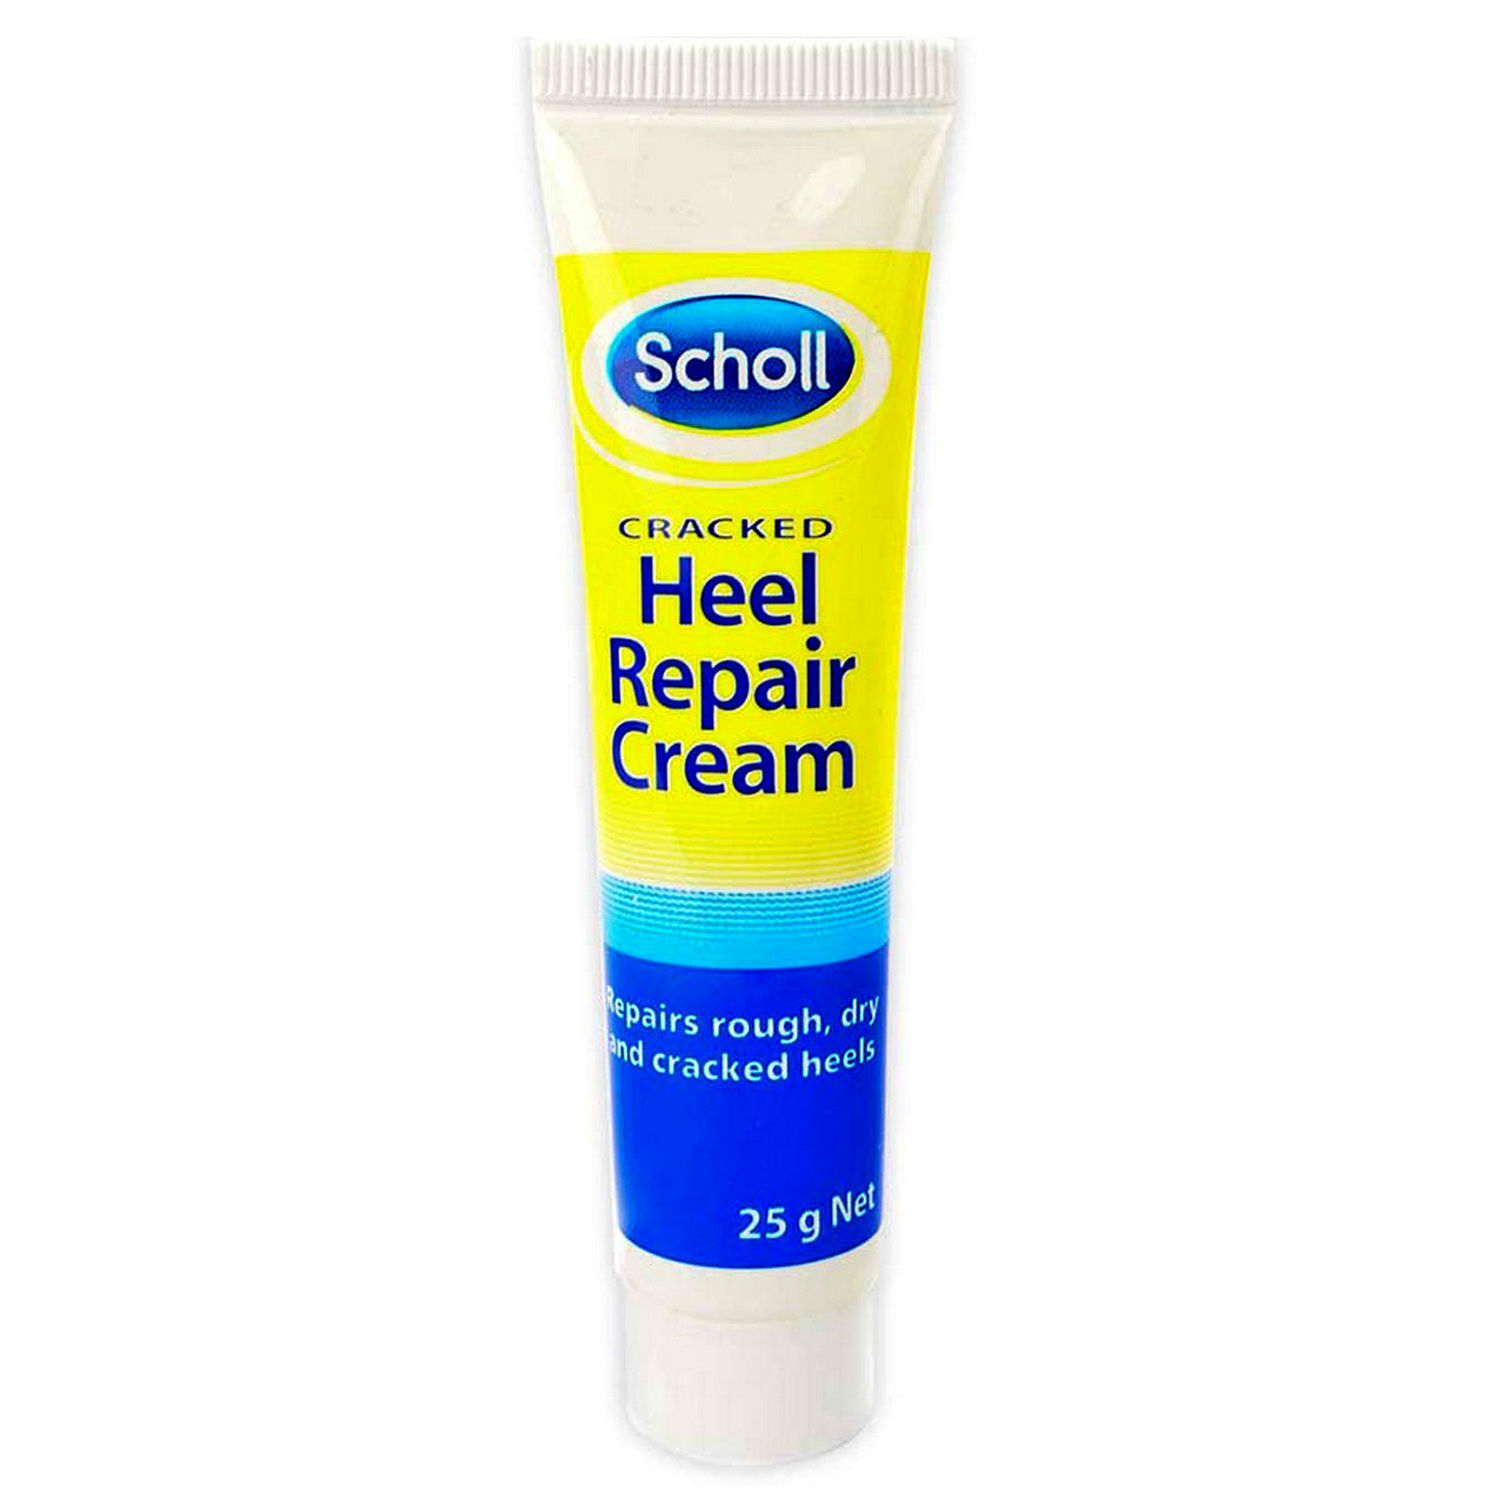 Scholl Cracked Heel Repair Cream, 25 gm, Pack of 1 